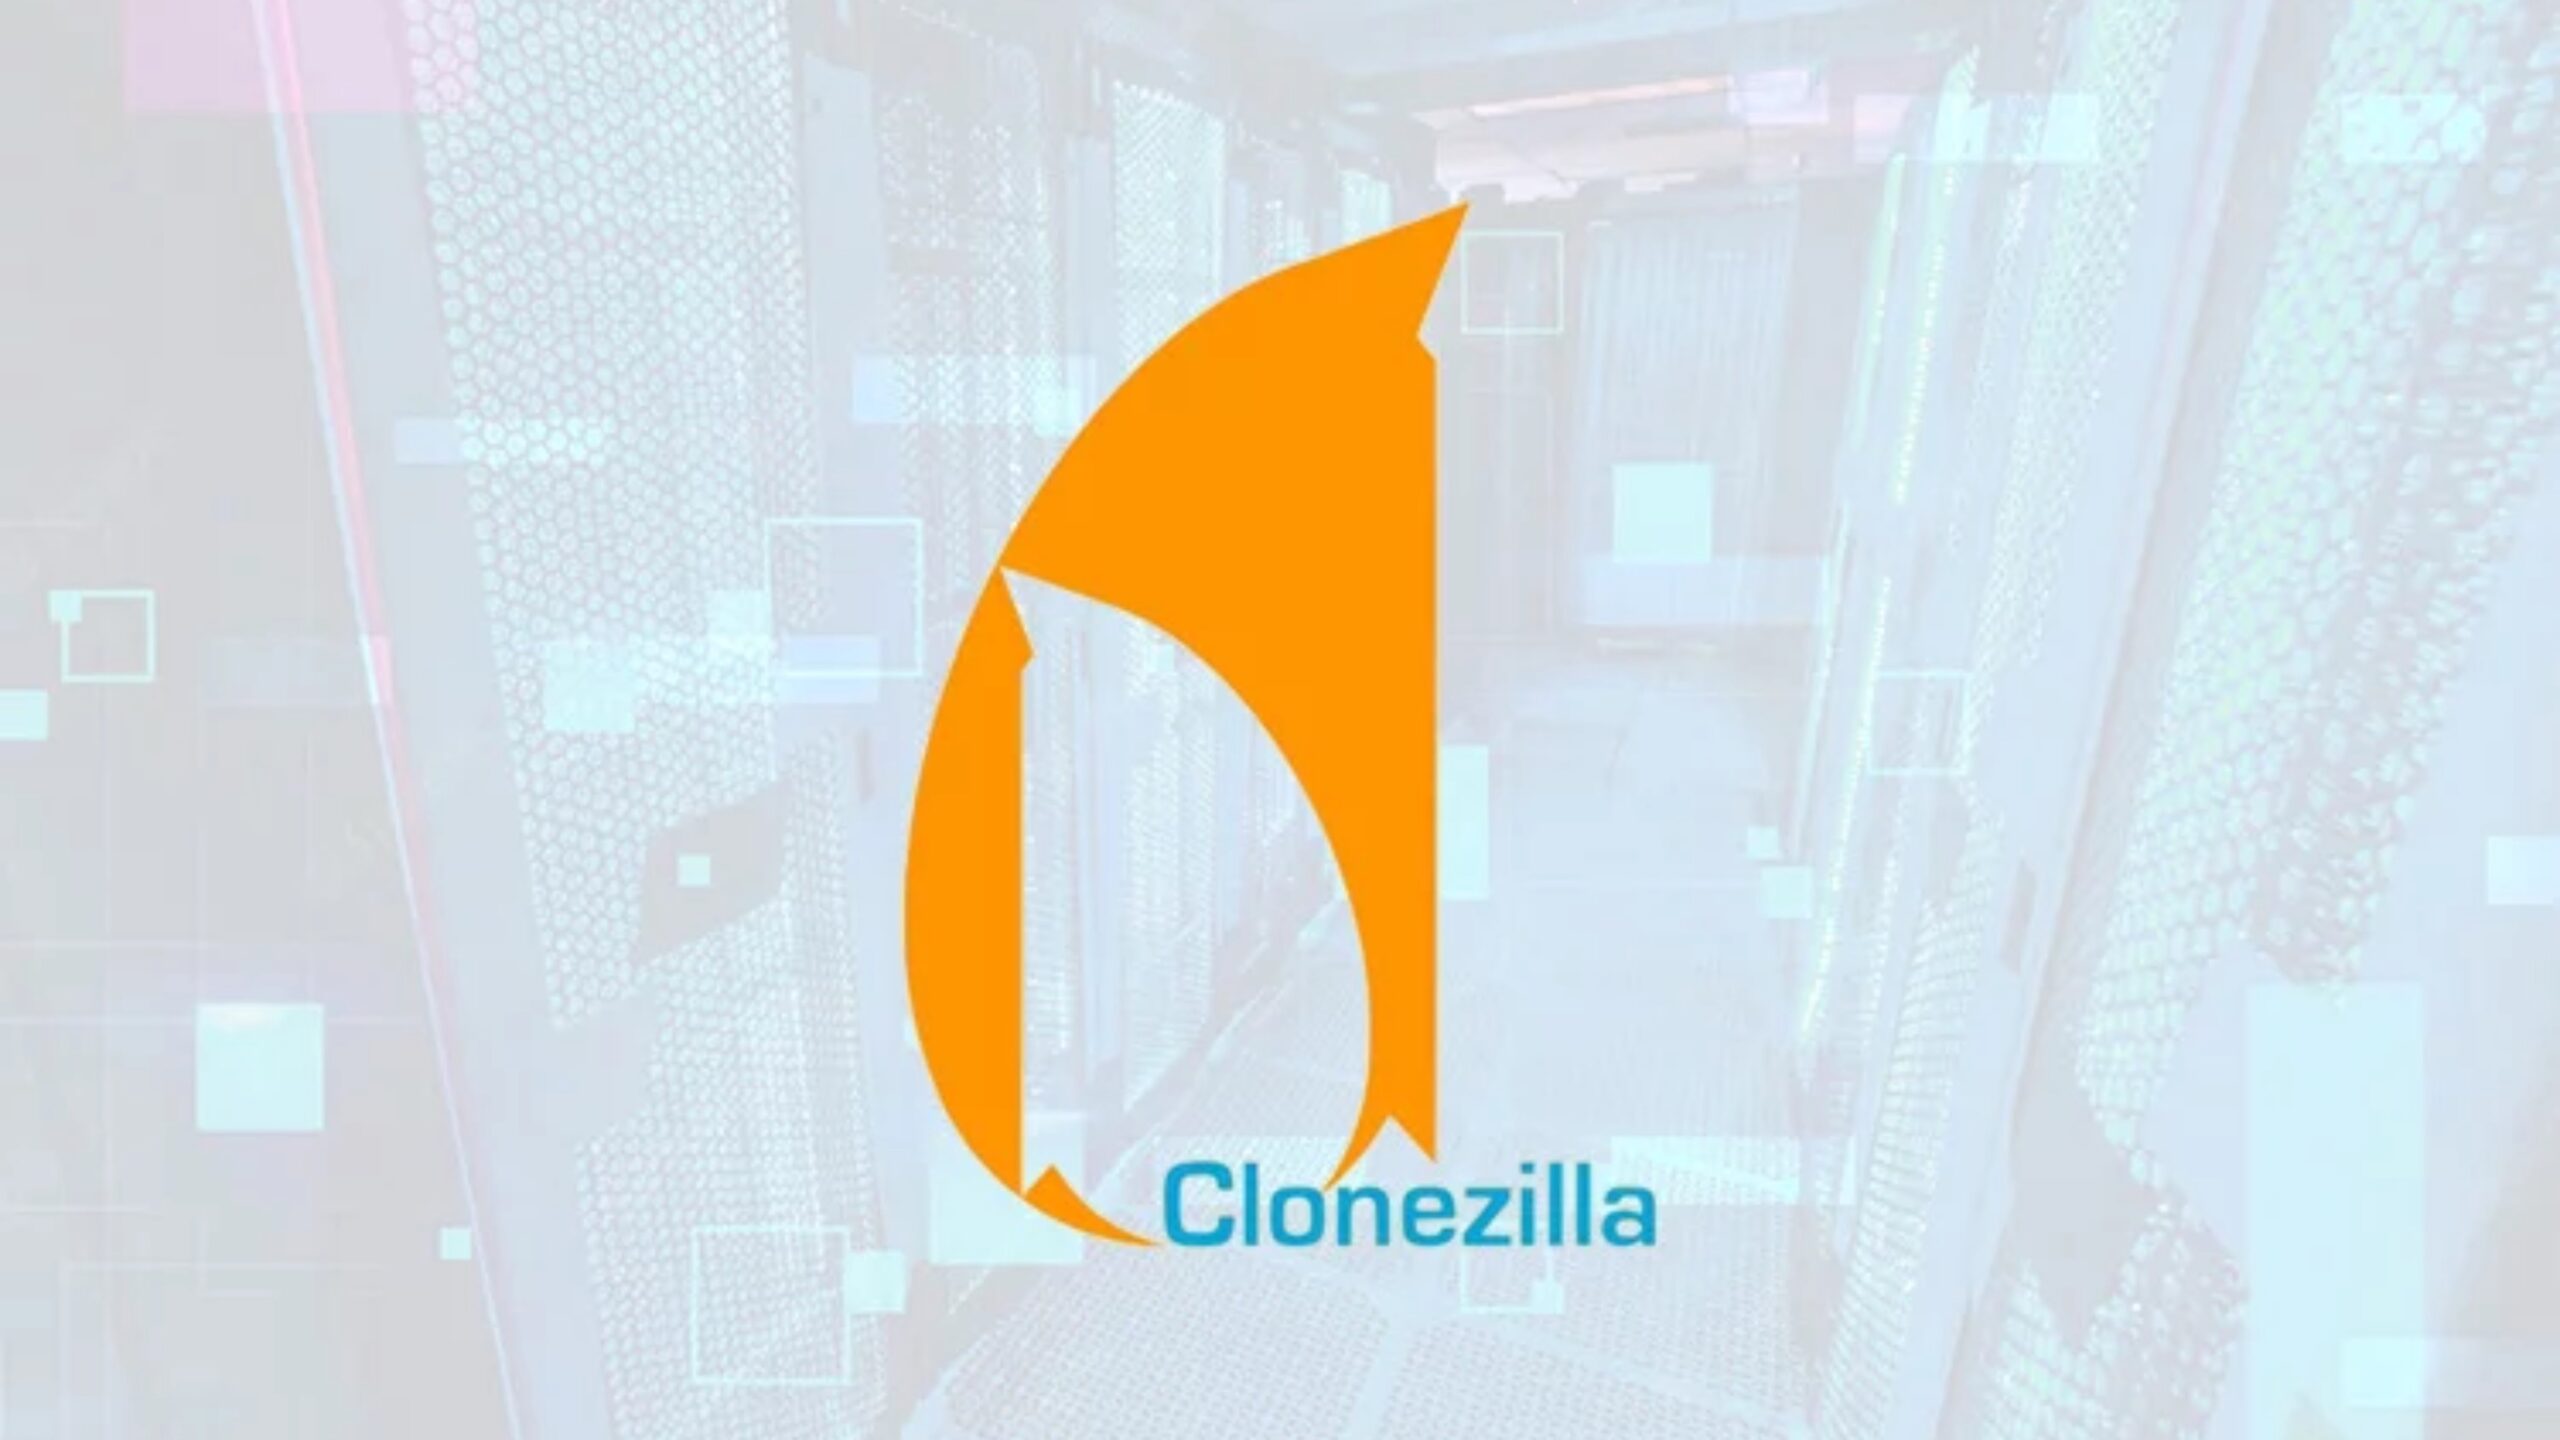 Clonezilla Live 3.1.1-27 instal the new version for ios